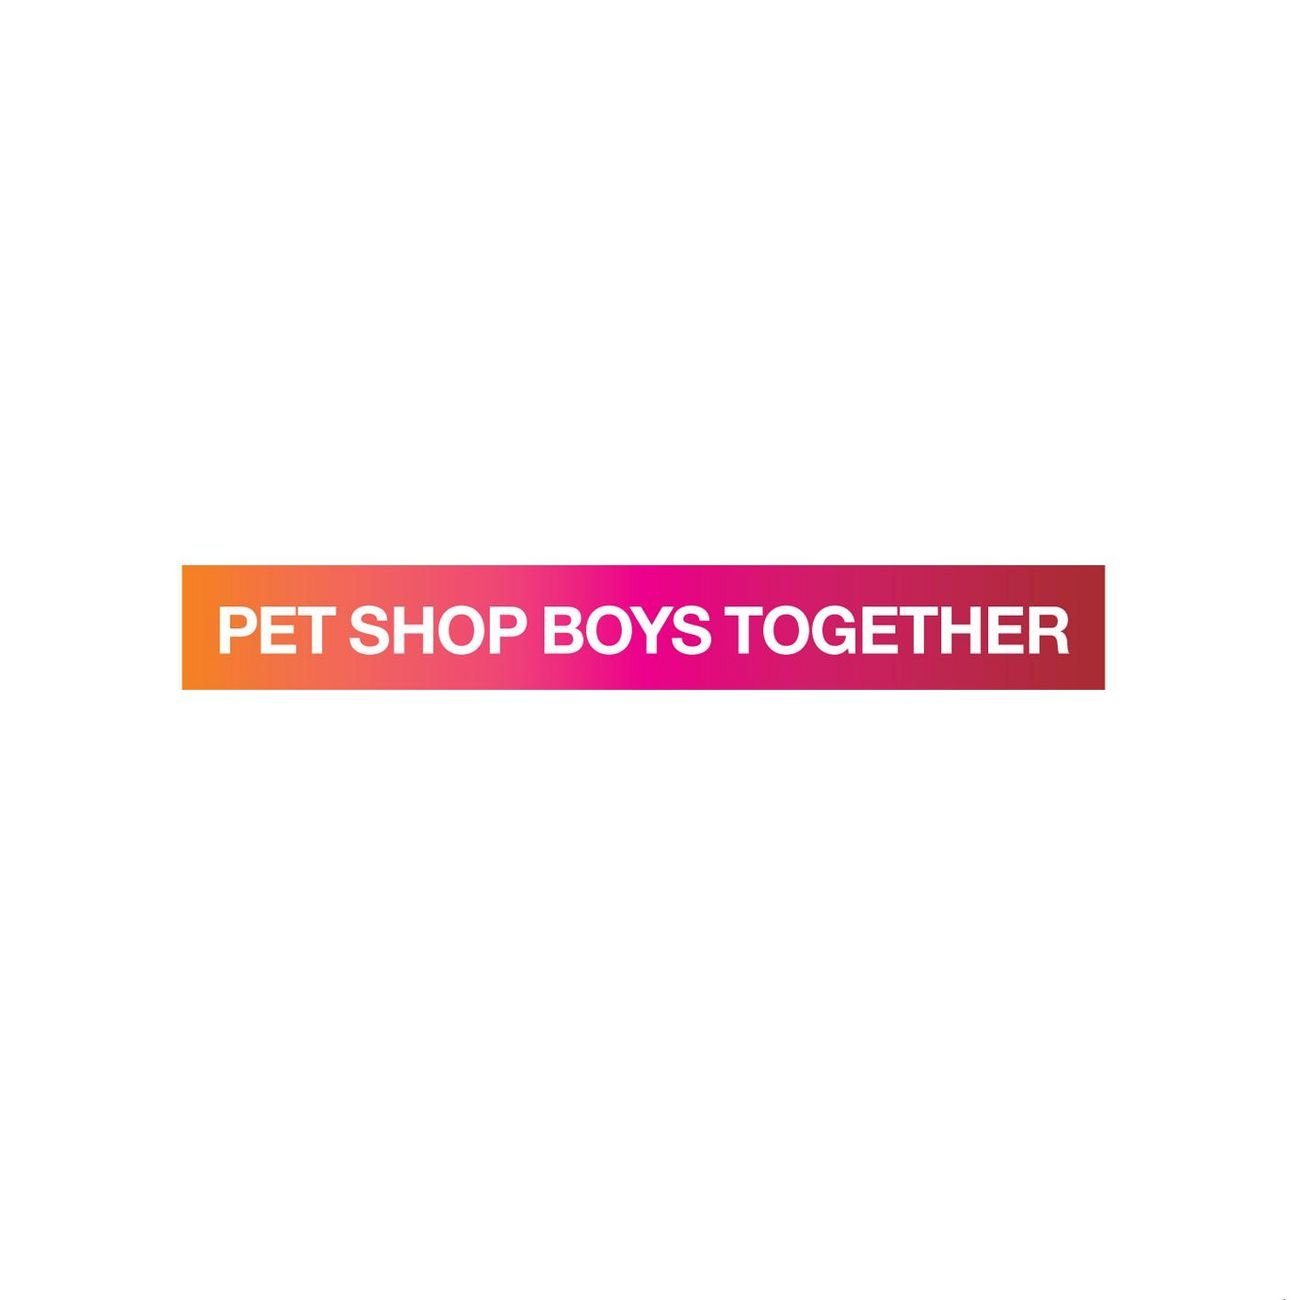 Pet shop boys текст. Pet shop boys Ultimate. Pet shop boys together. Pet shop boys Elysium further Listening. Pet shop boys fundamental.